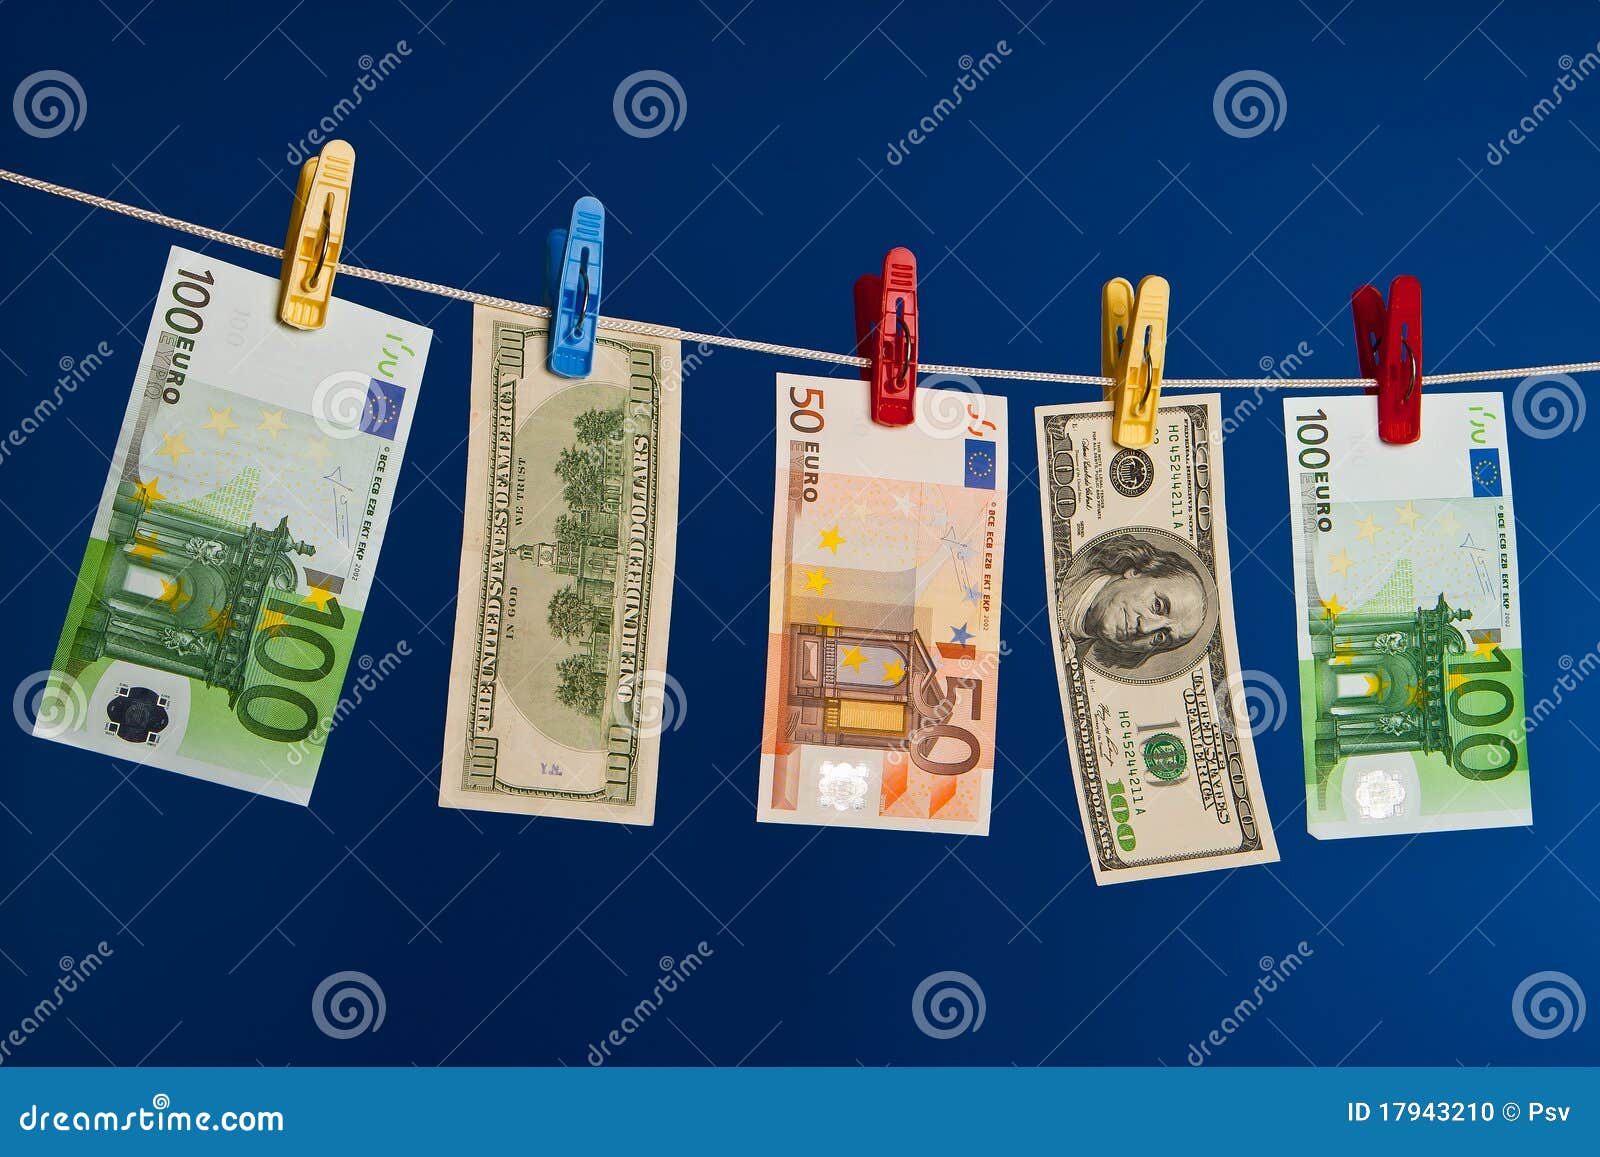 free clip art money laundering - photo #47